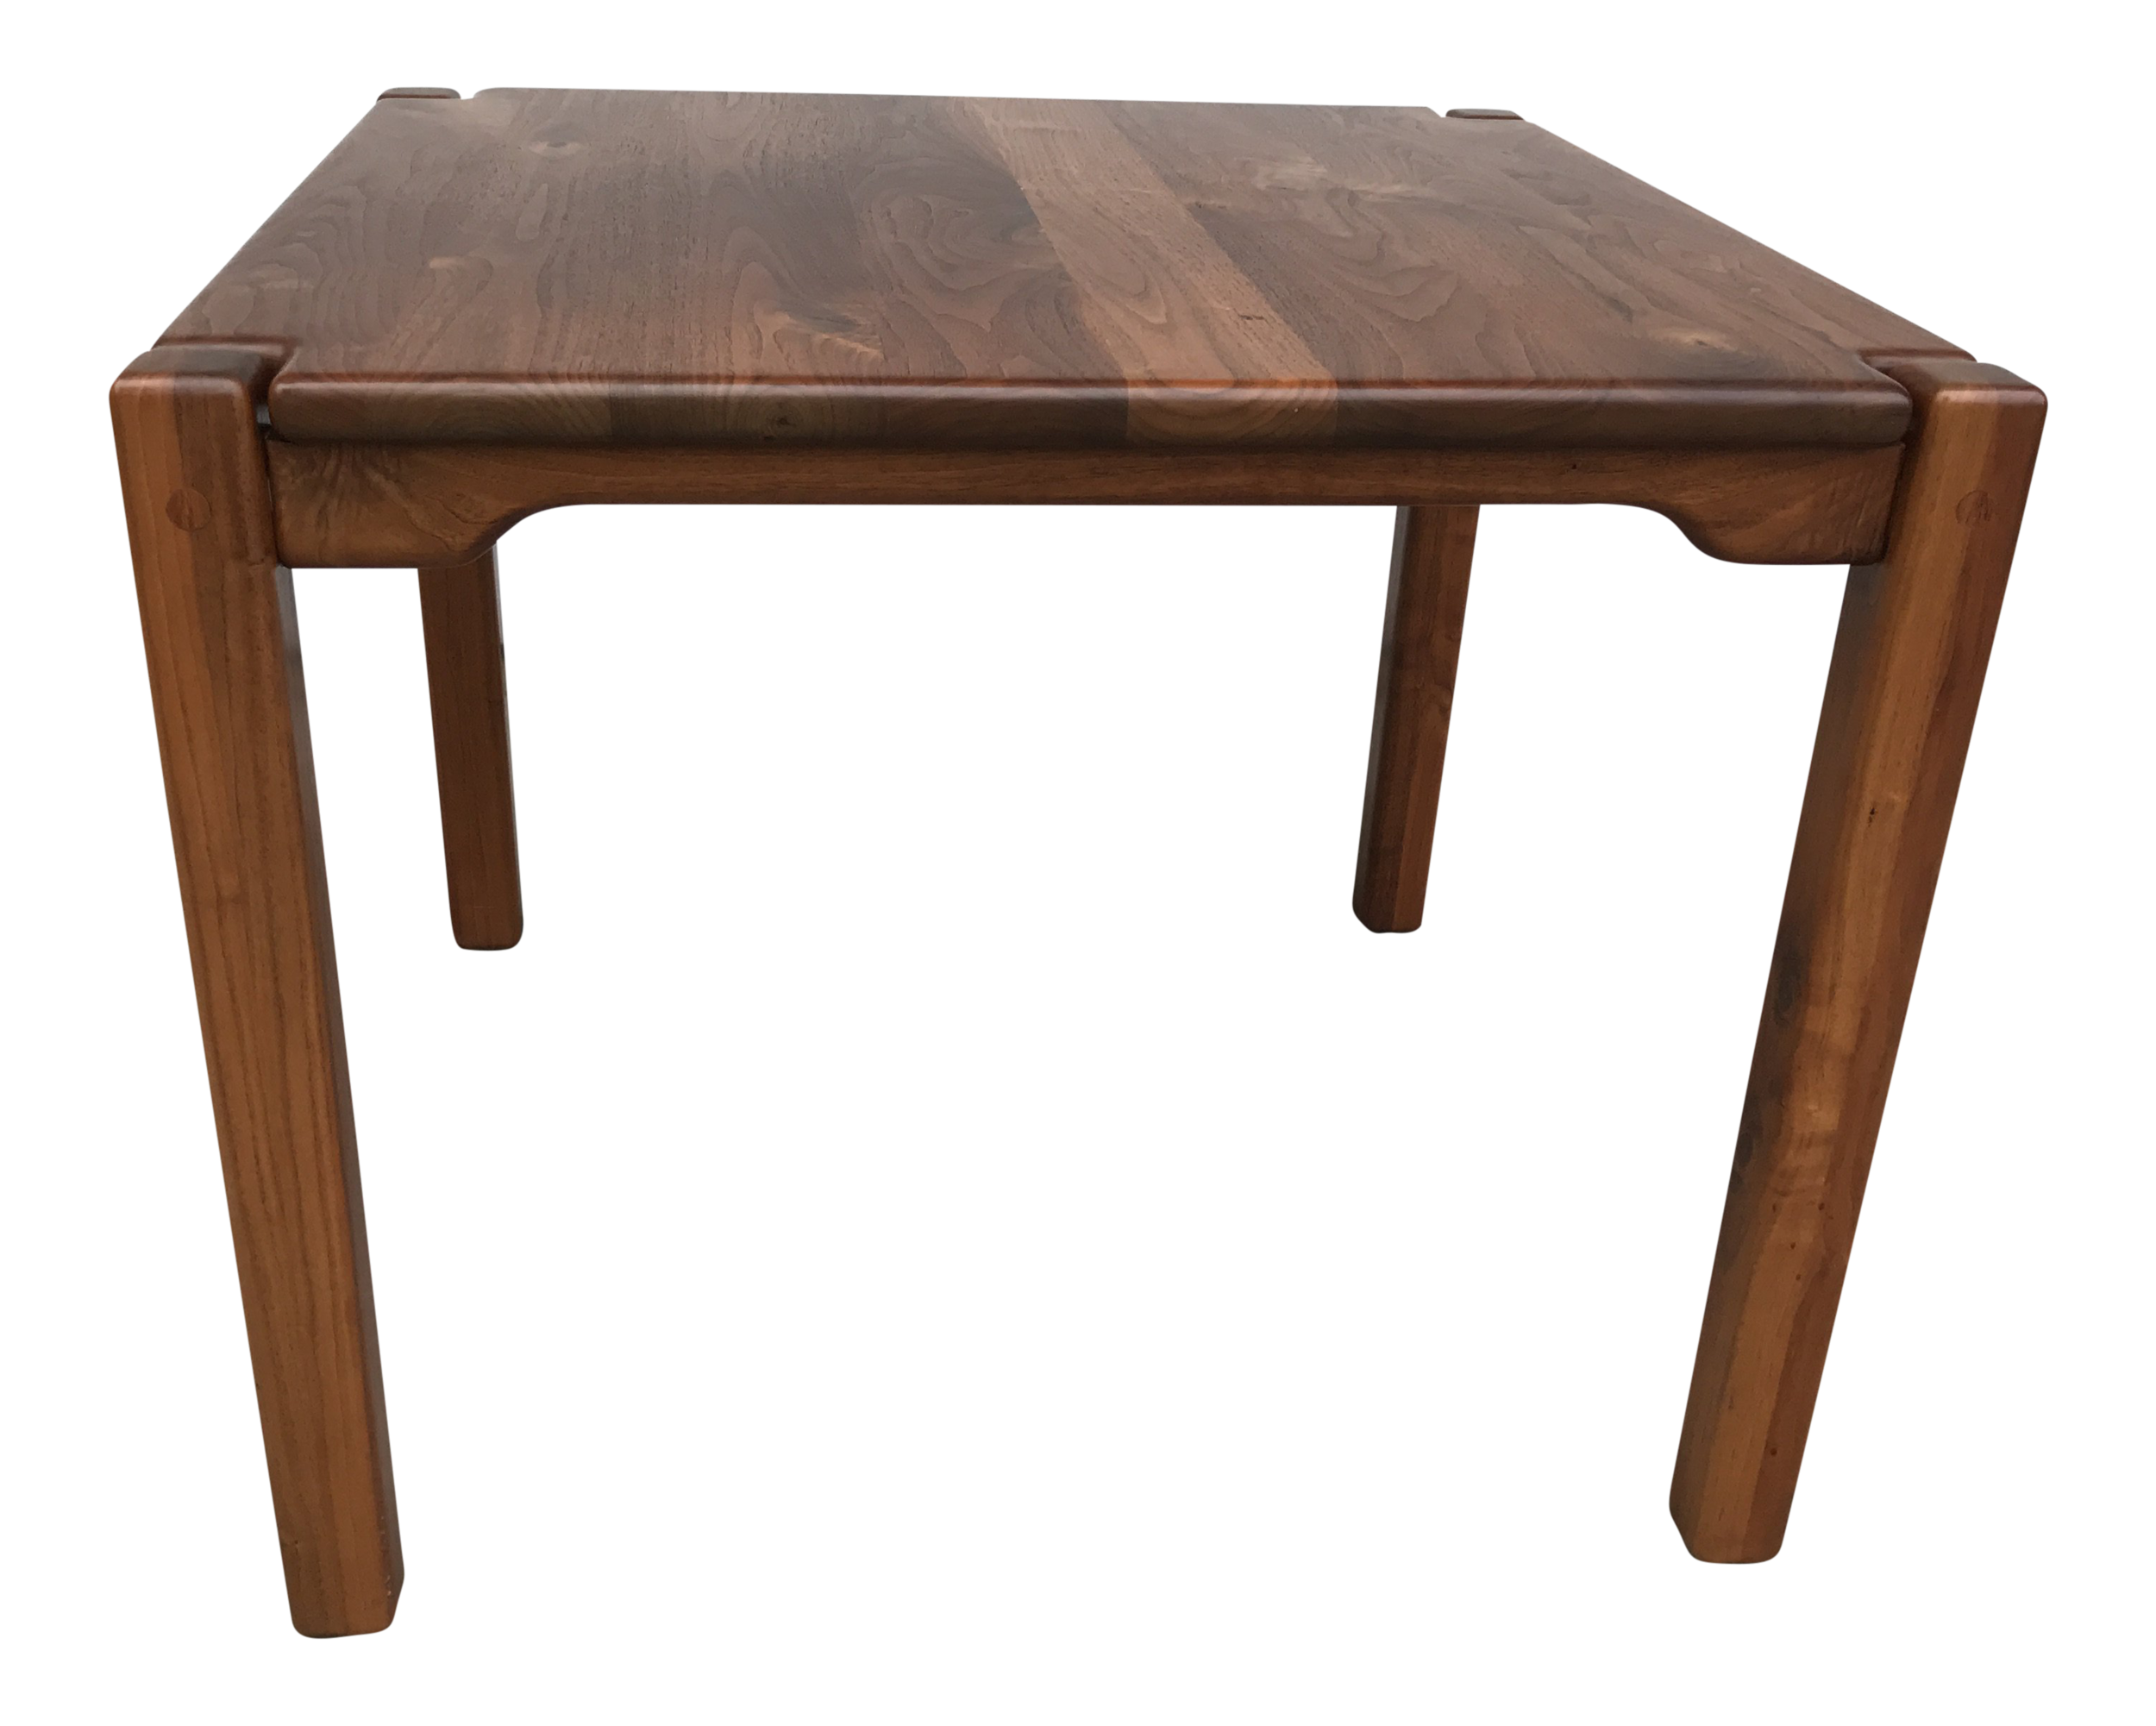 1980s-mid-century-modern-bruce-mcquilkin-koa-wood-dining-table-0776.png